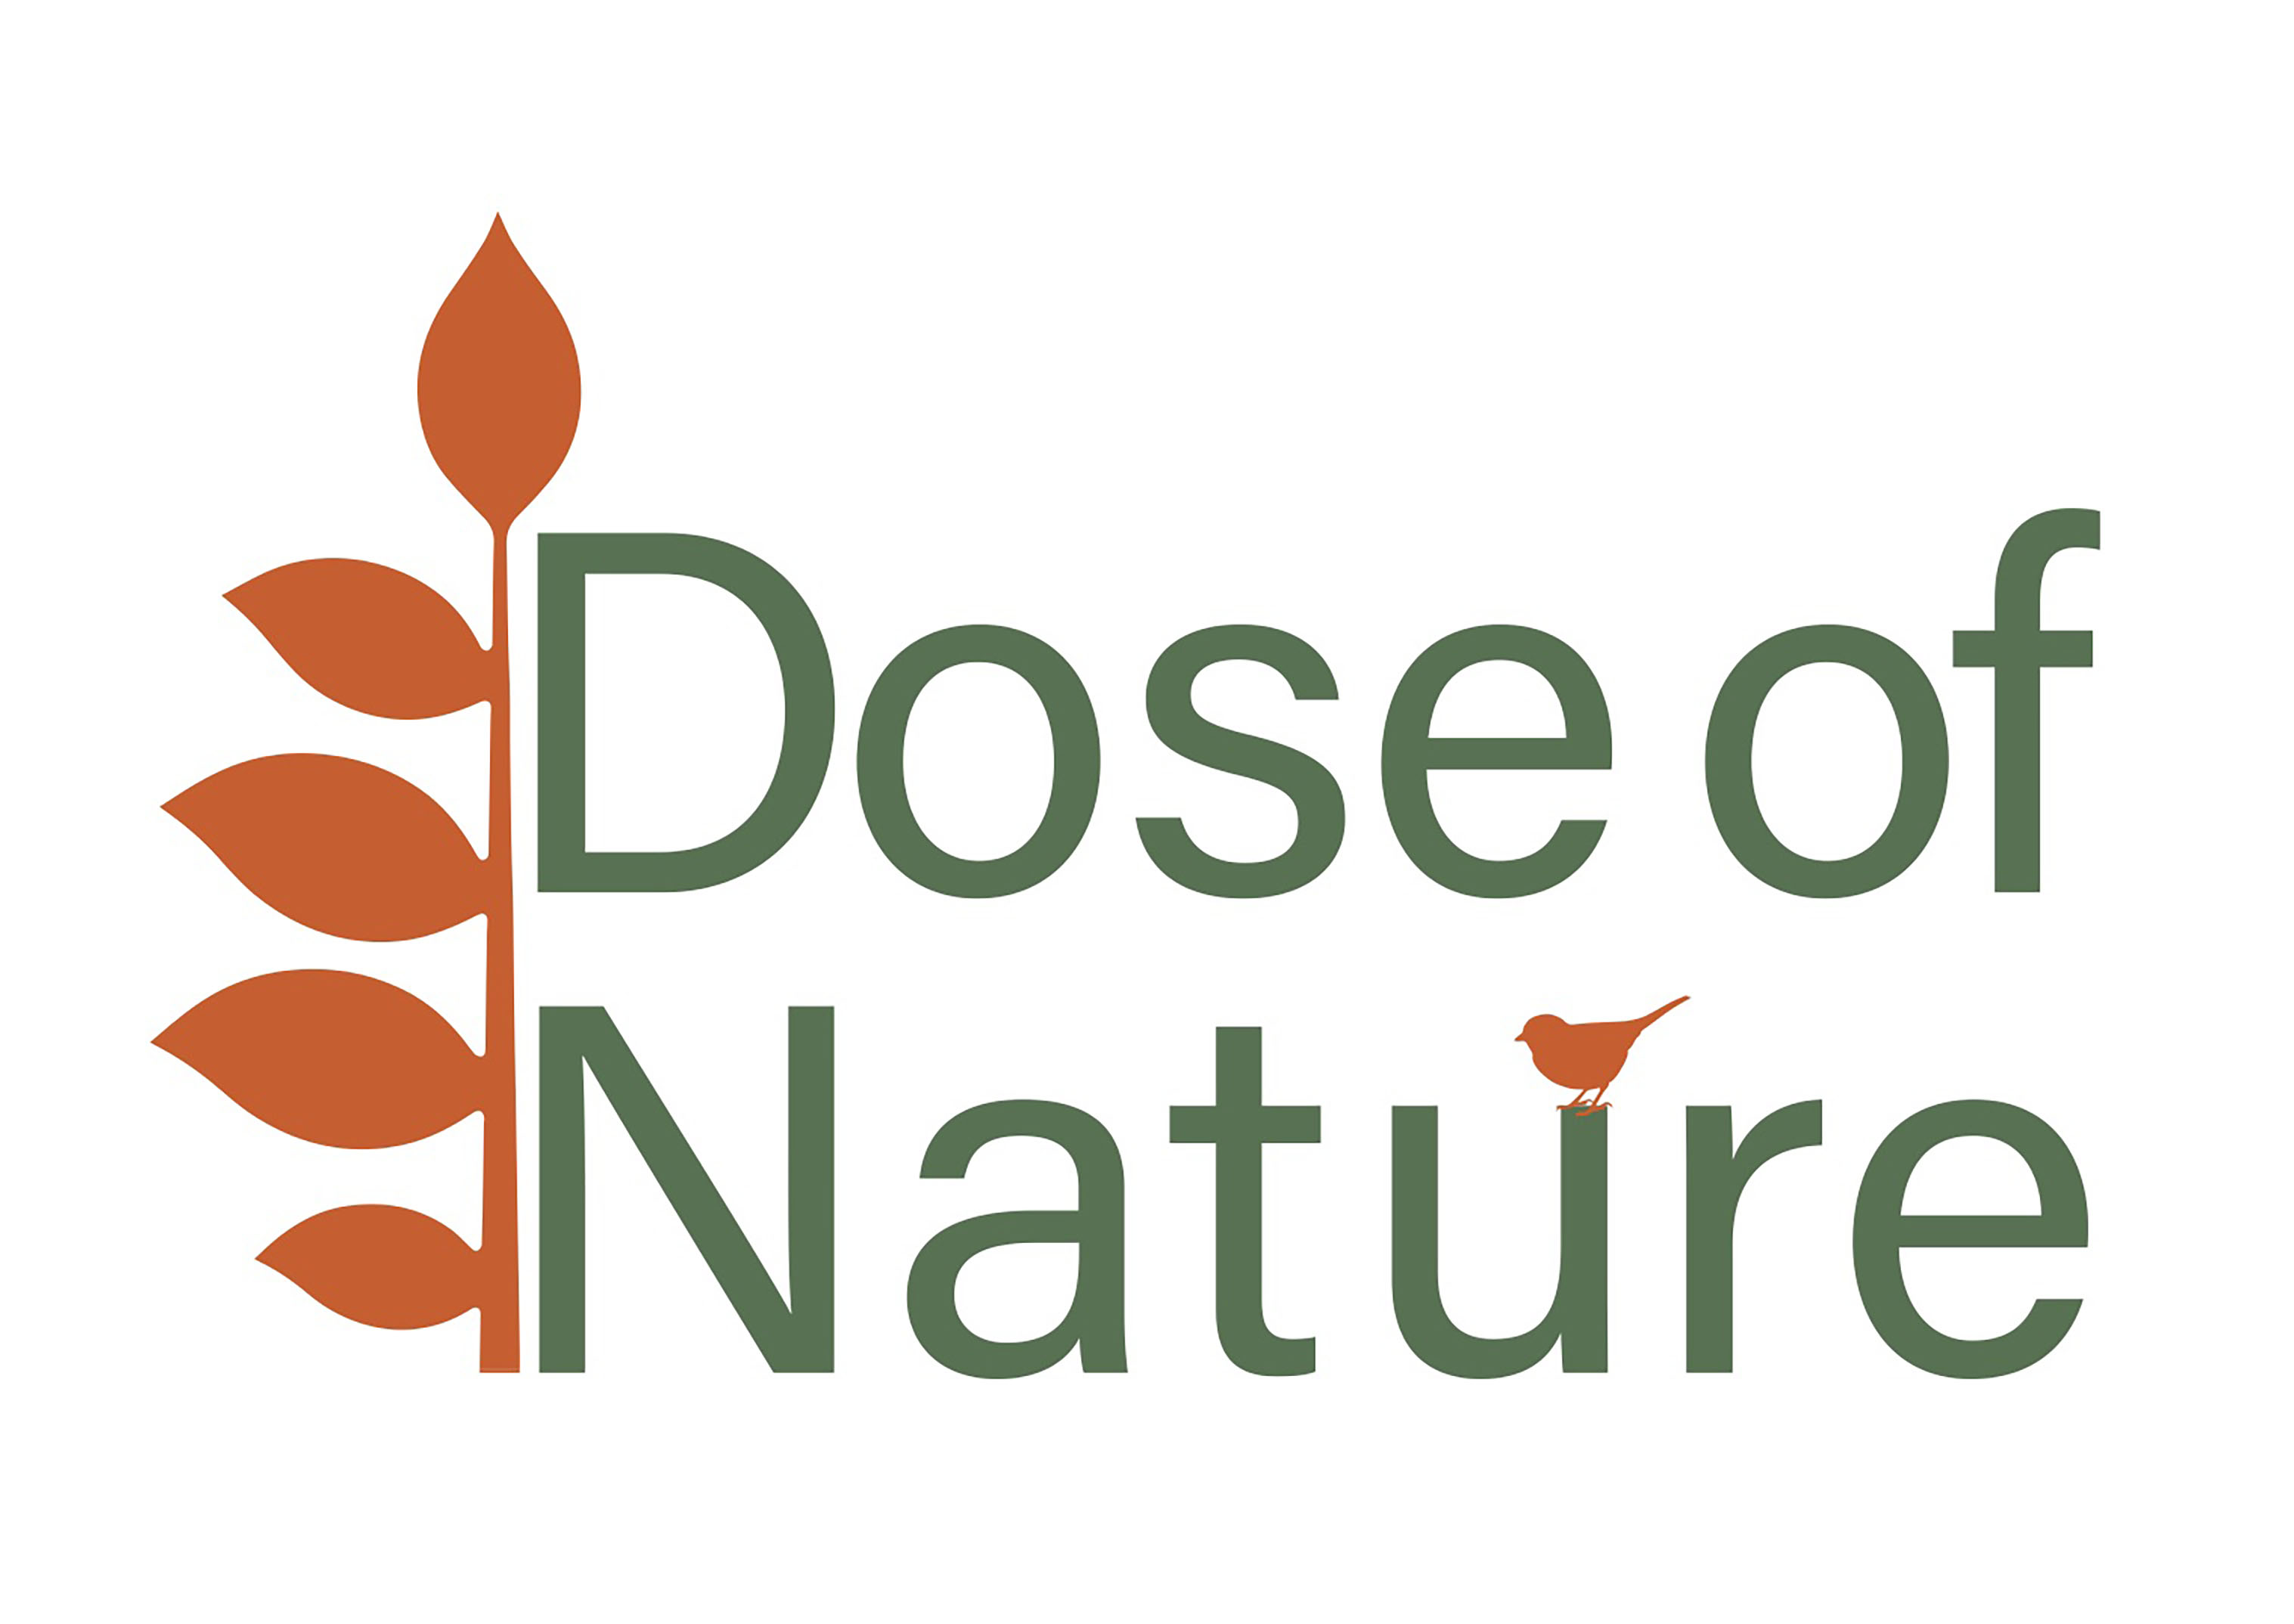 Dose of Nature logo